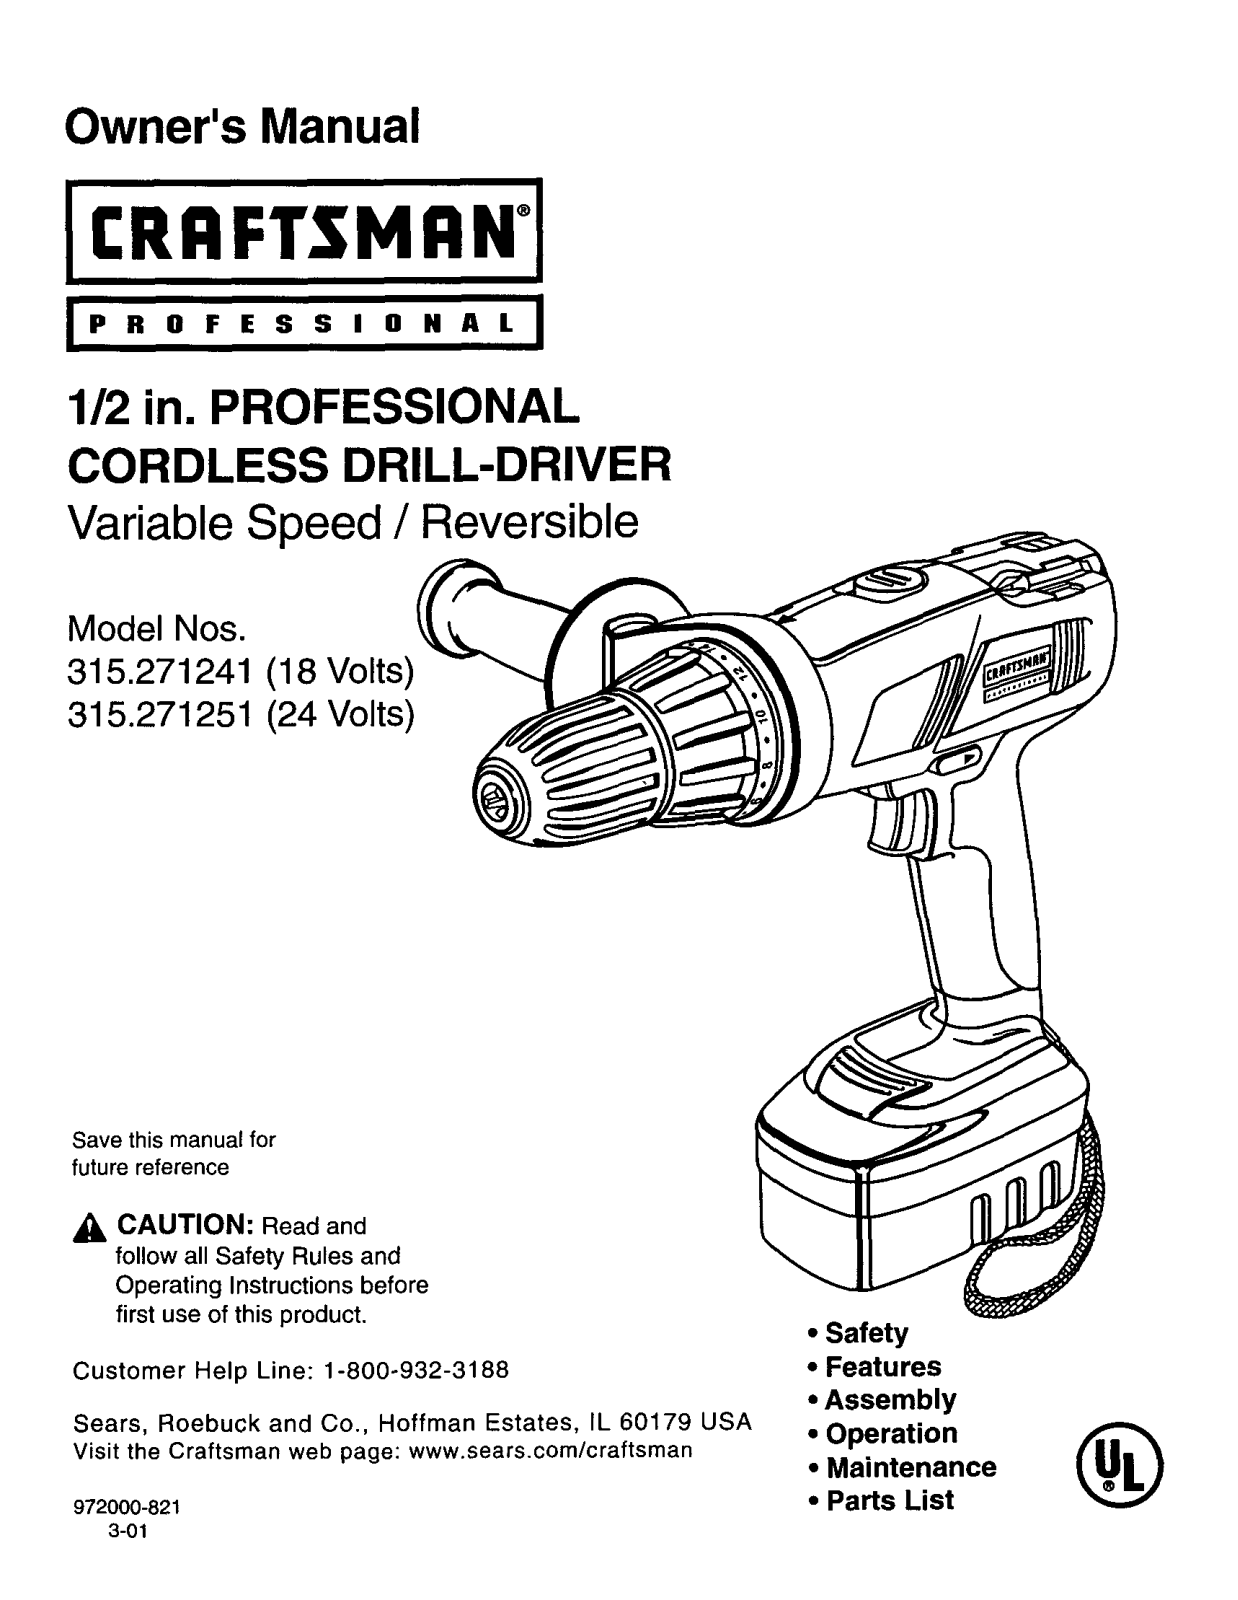 Craftsman 315271251, 315271241 Owner’s Manual